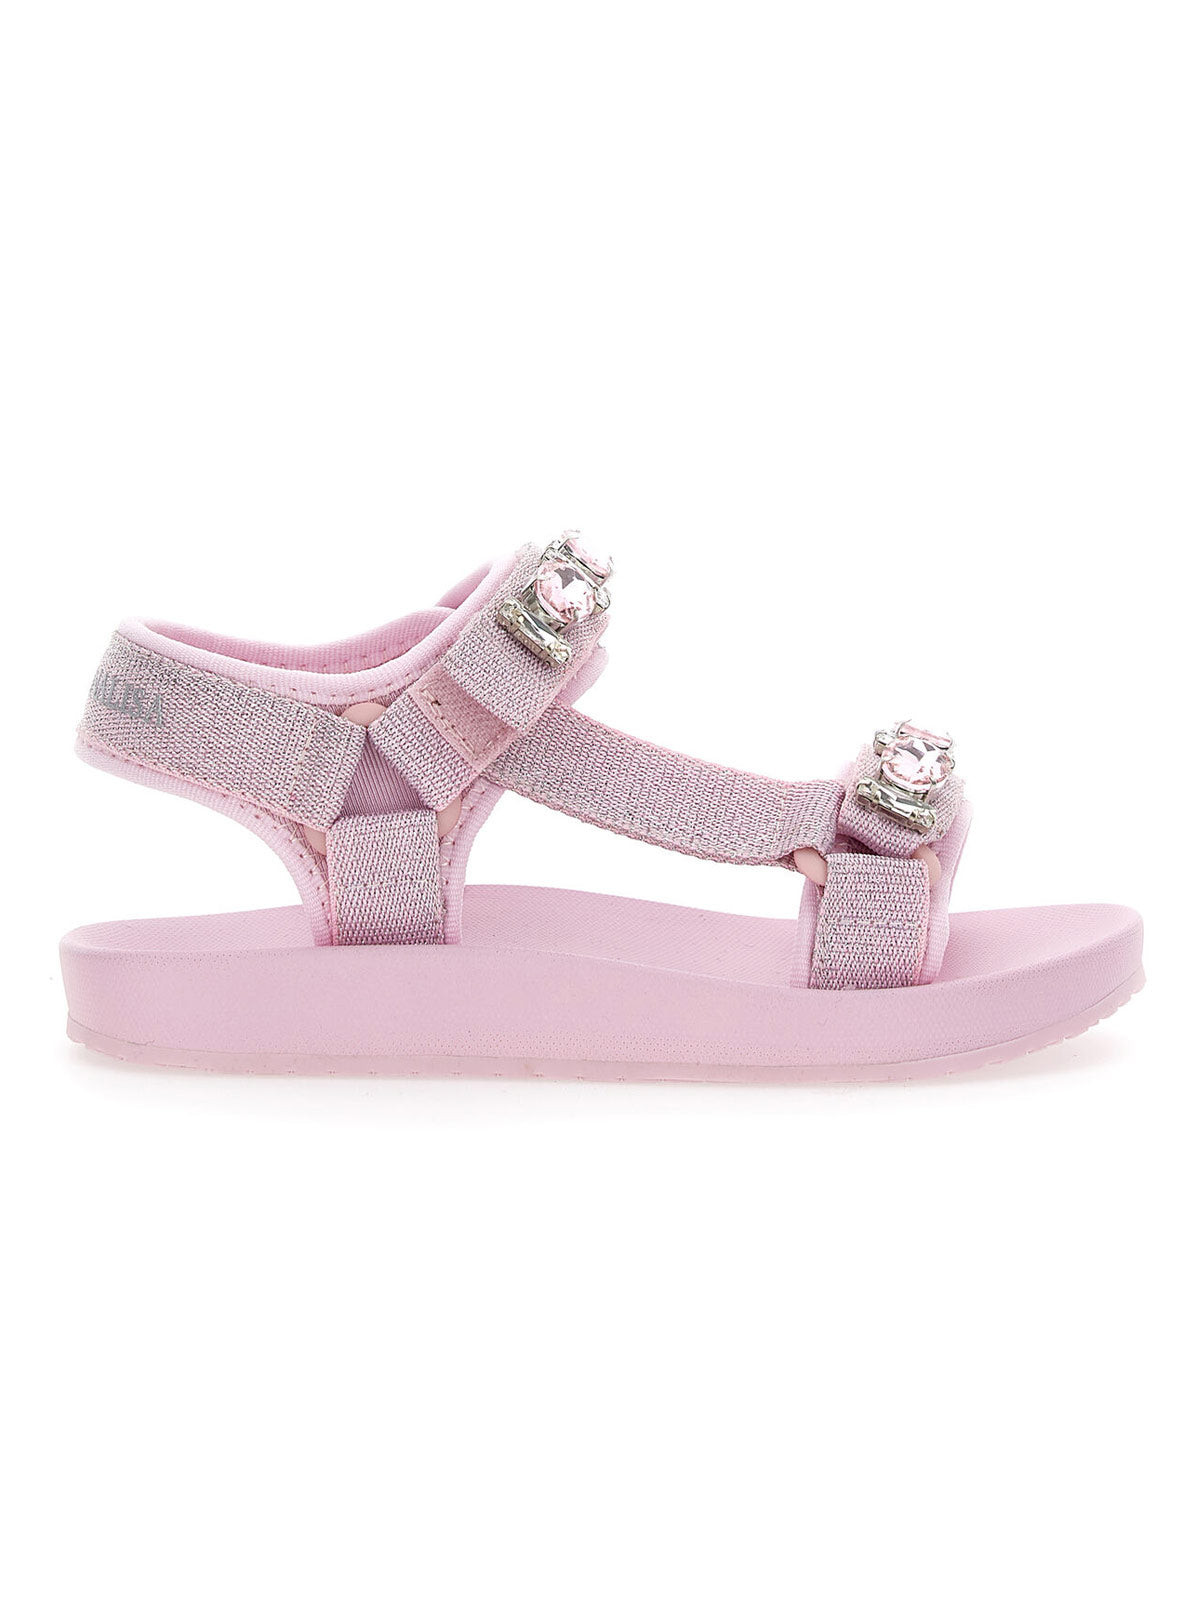 Monnalisa Hi-tech sandals with glam details-Pink